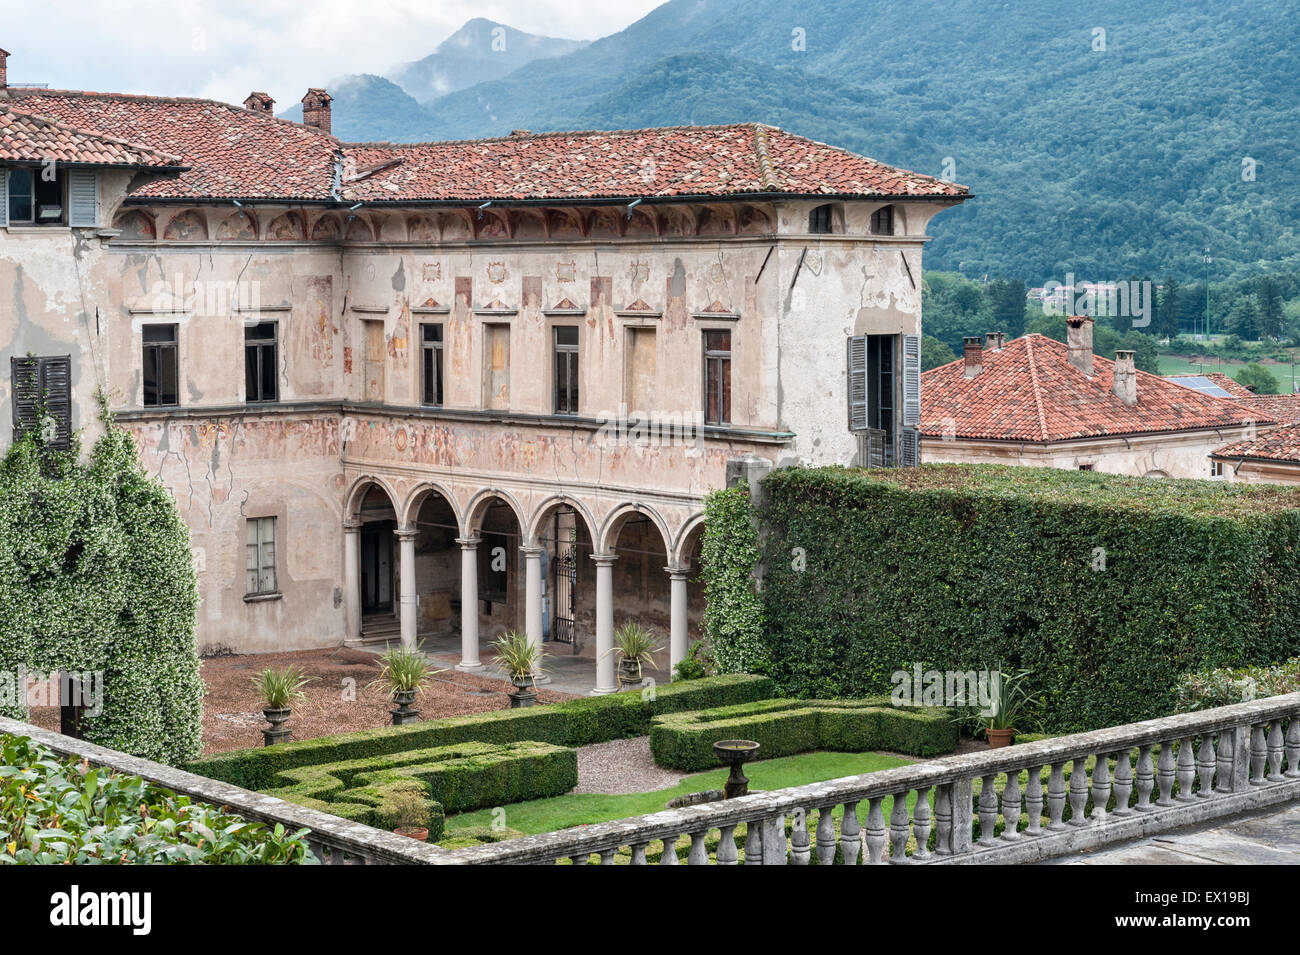 Villa Cicogna Mozzoni, Bisuschio, Lombardy, northern Italy. A 16c villa and gardens near Lake Como Stock Photo